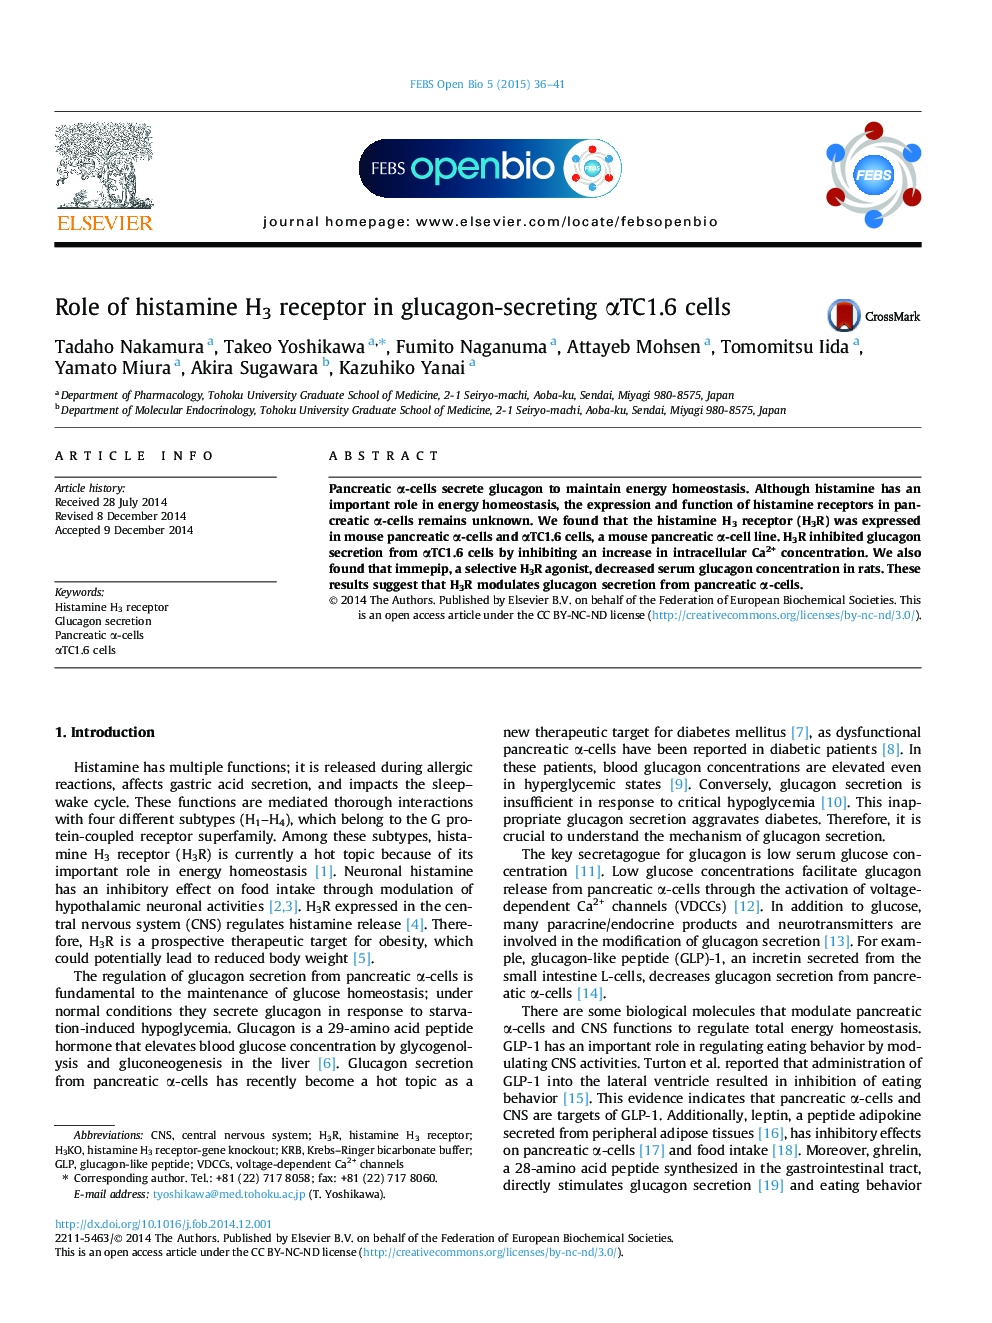 Role of histamine H3 receptor in glucagon-secreting αTC1.6 cells